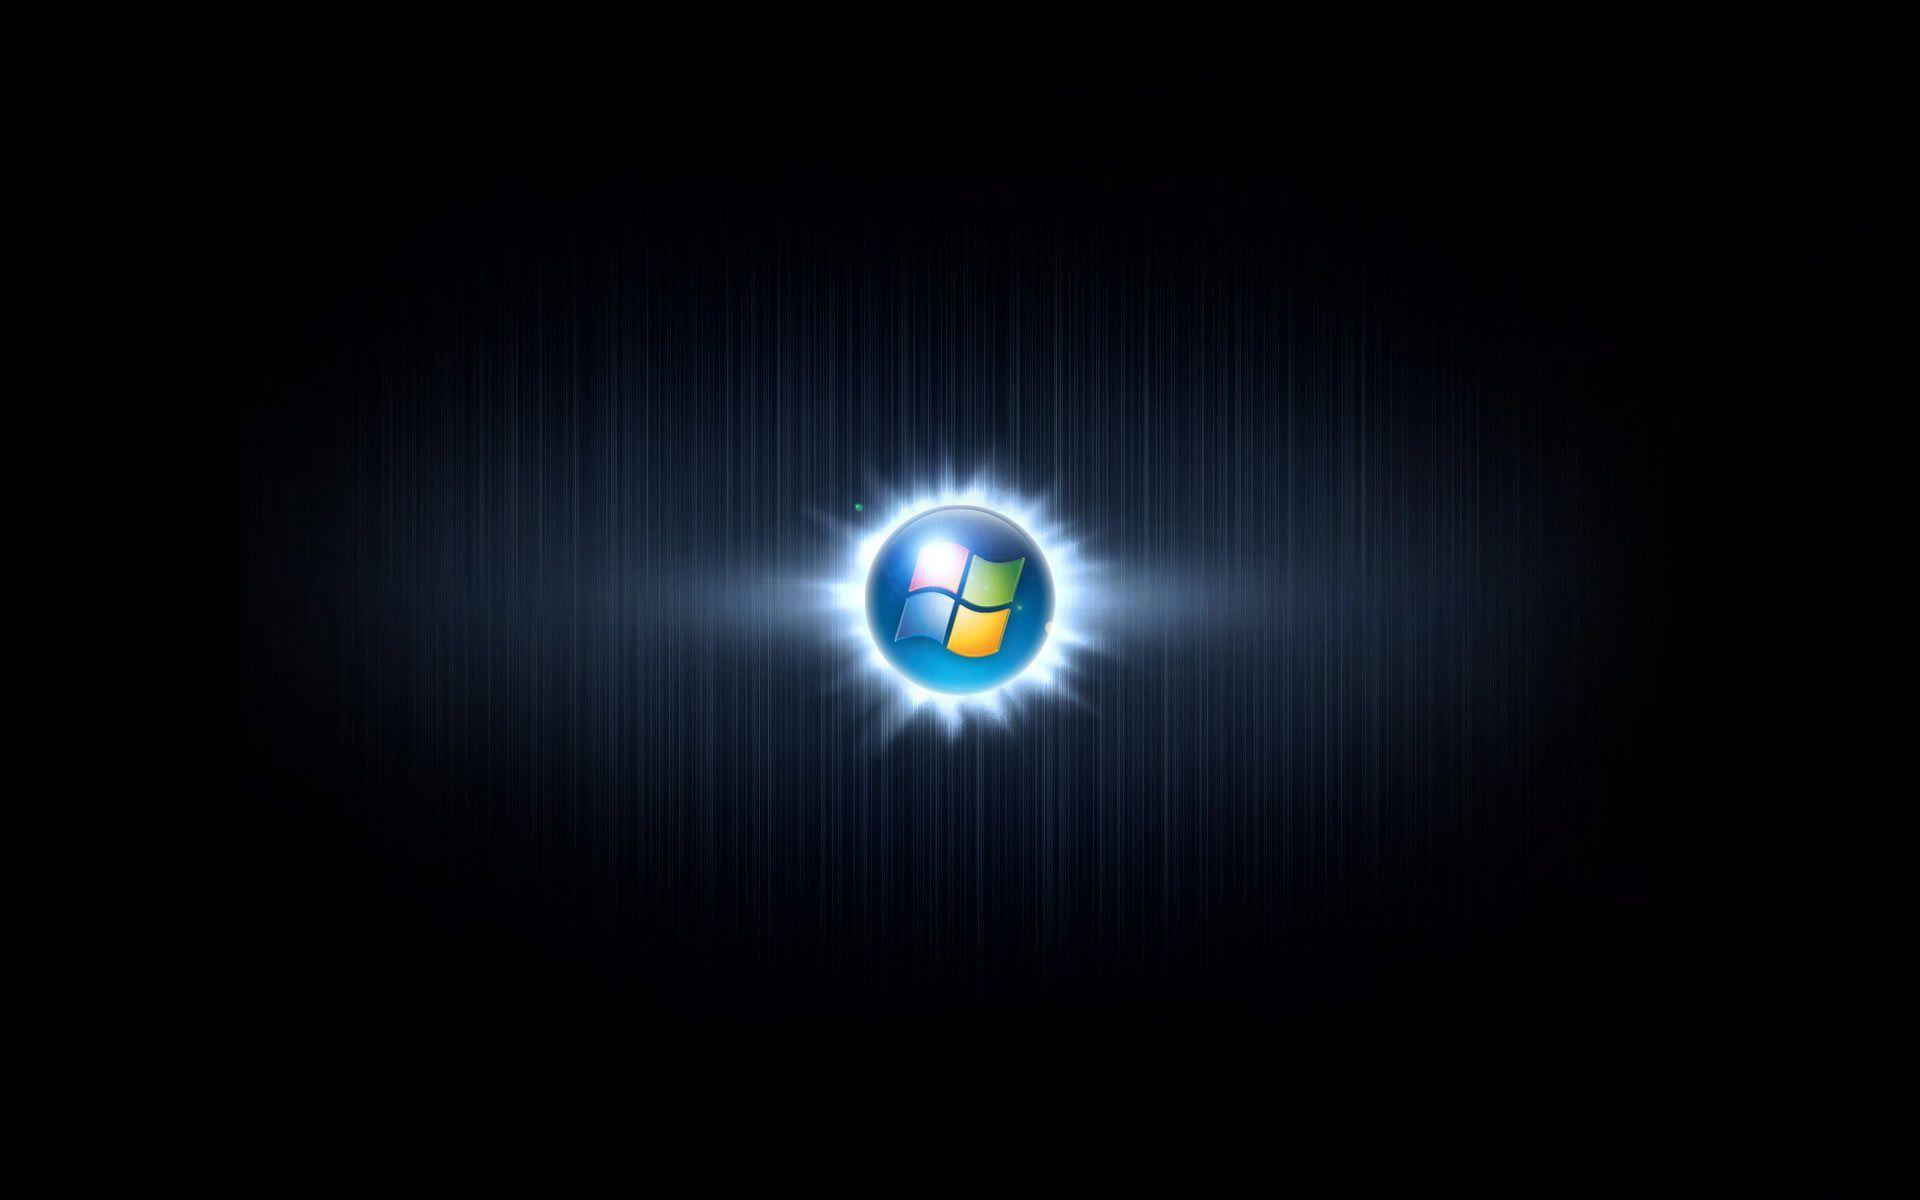 Free Microsoft Windows 8 Wallpaper in HD High Quality